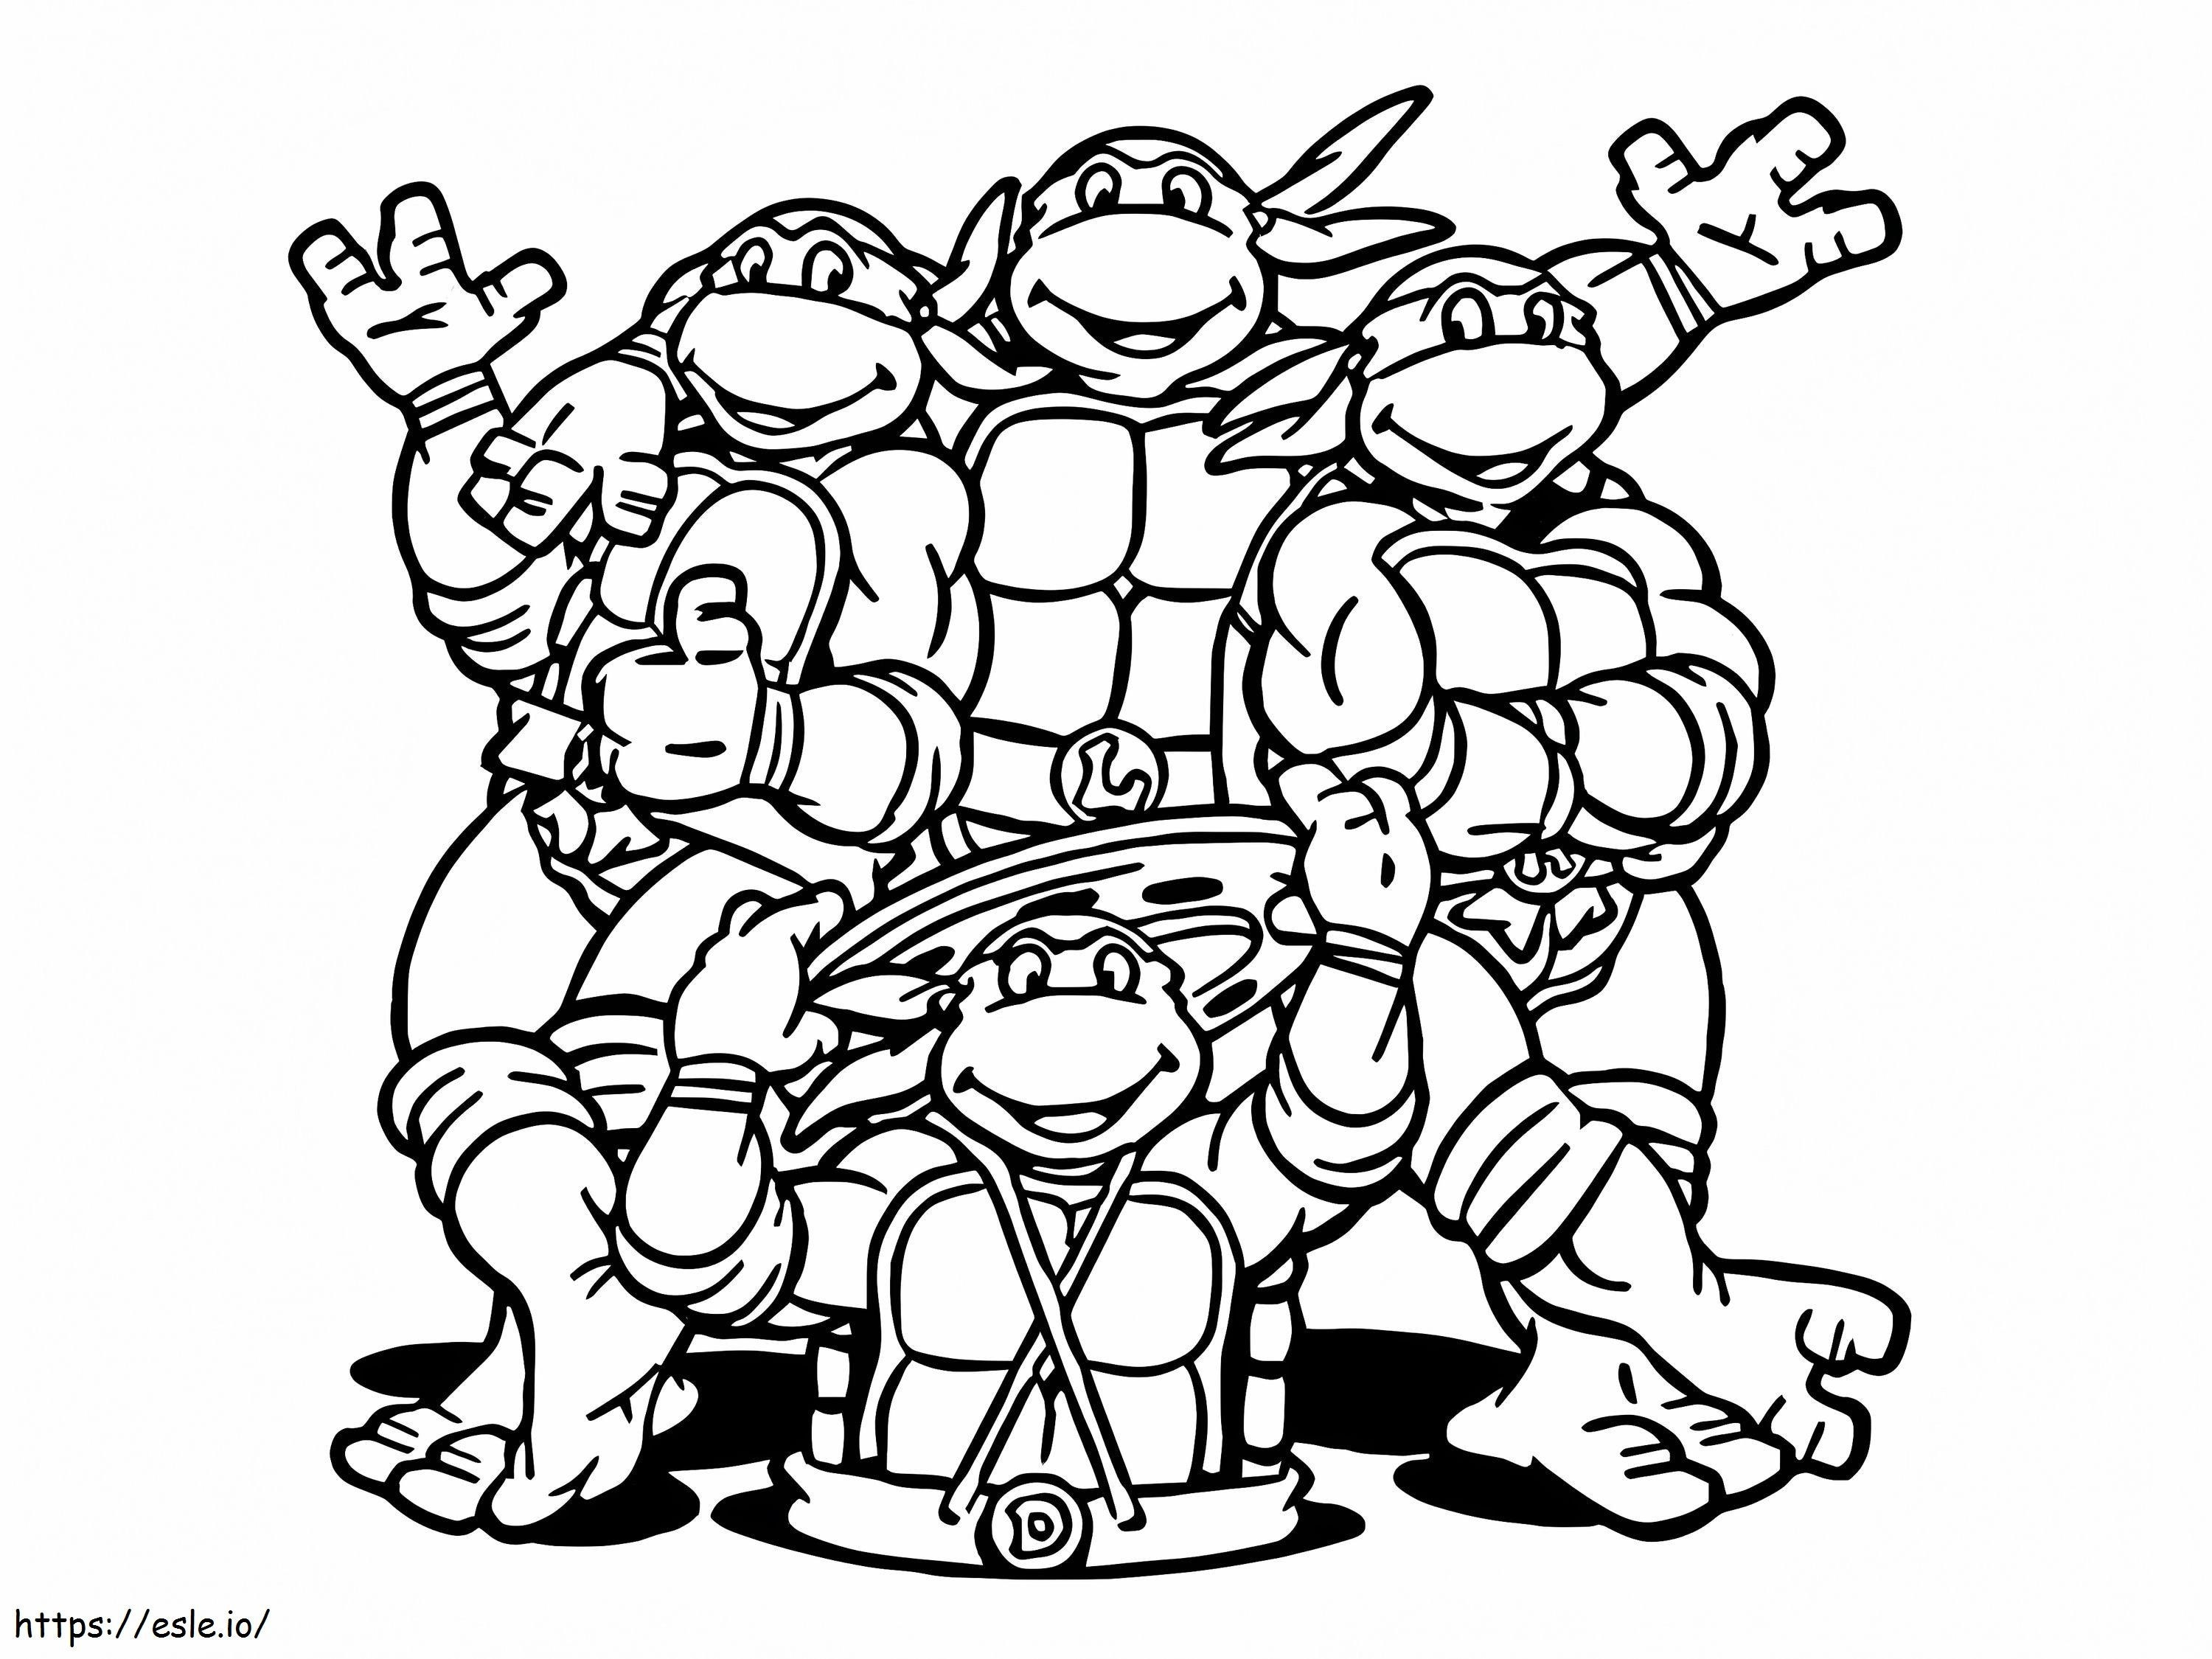 Teenage Mutant Ninja Turtles Smiling coloring page